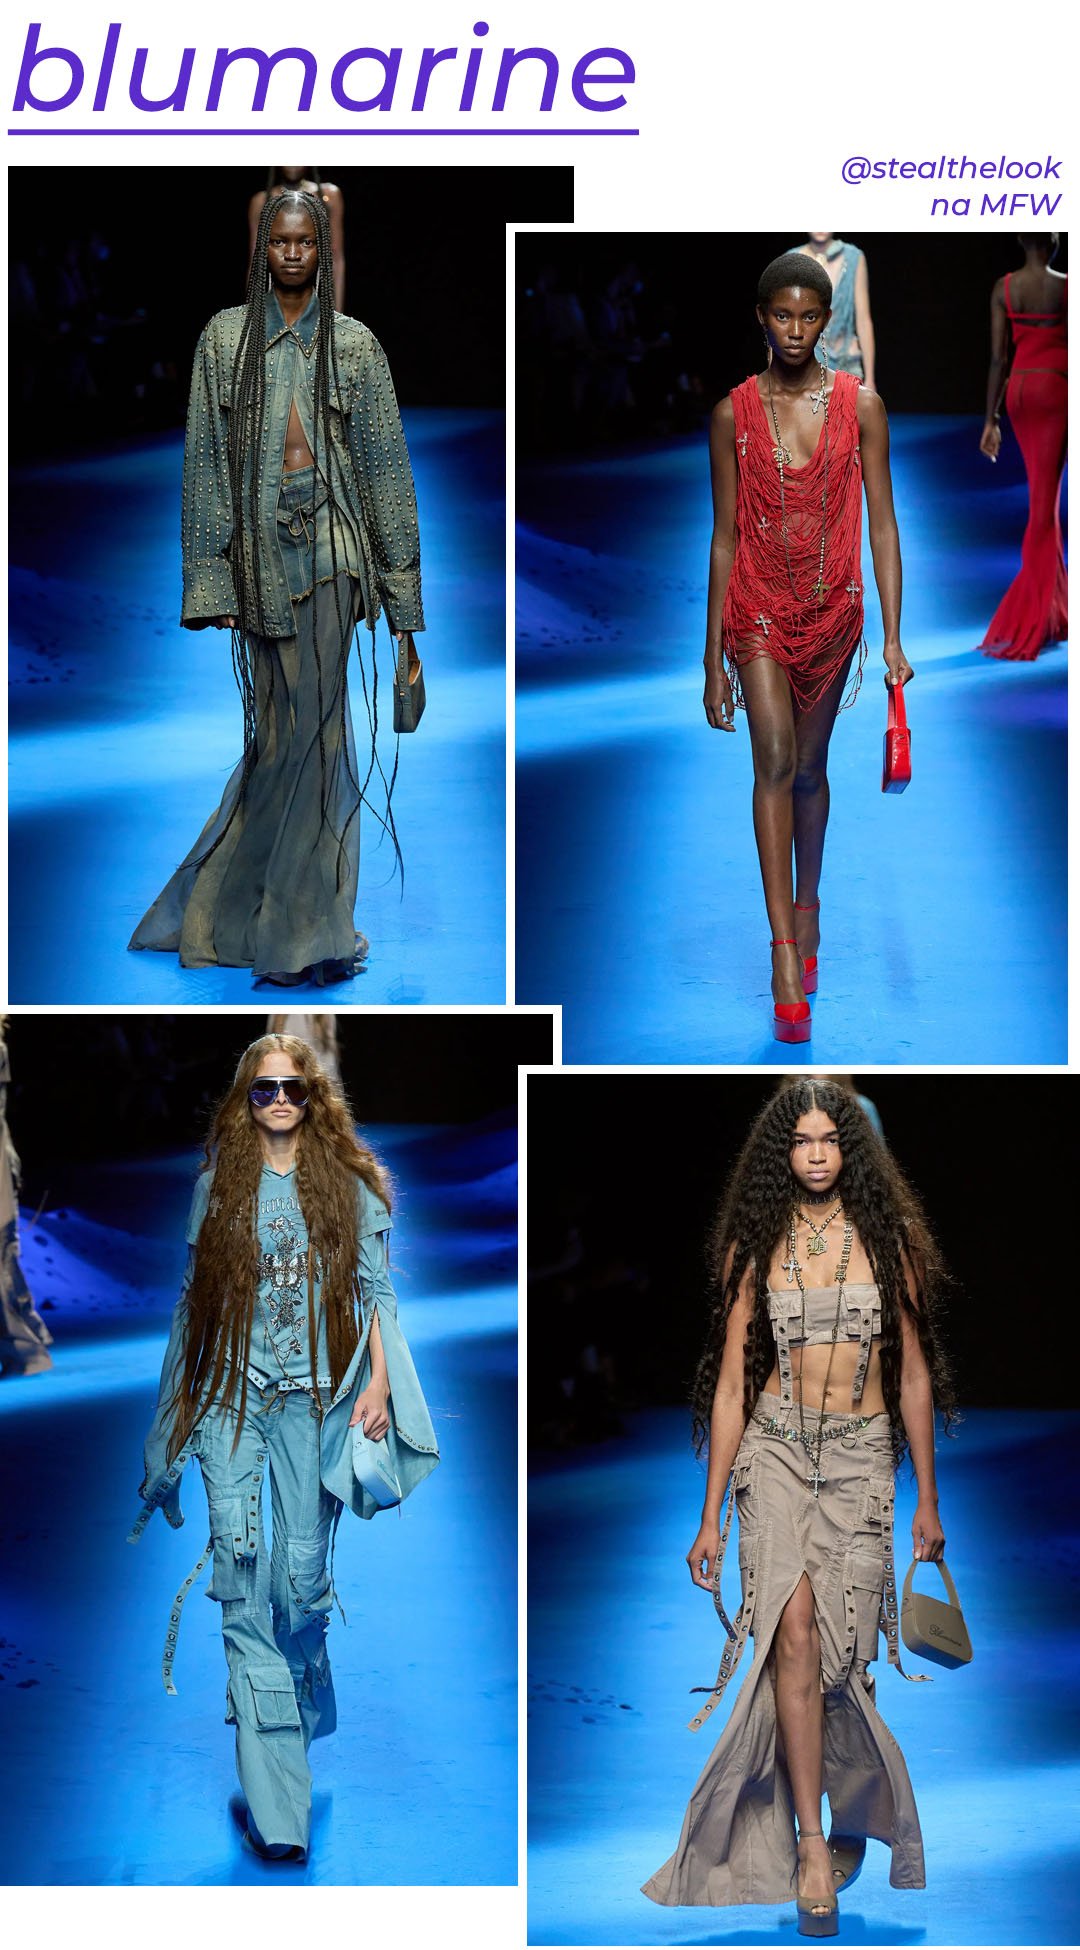 Blumarine S/S 2023 - roupas diversas - Milano Fashion Week - Primavera - modelo andando pela passarela - https://stealthelook.com.br